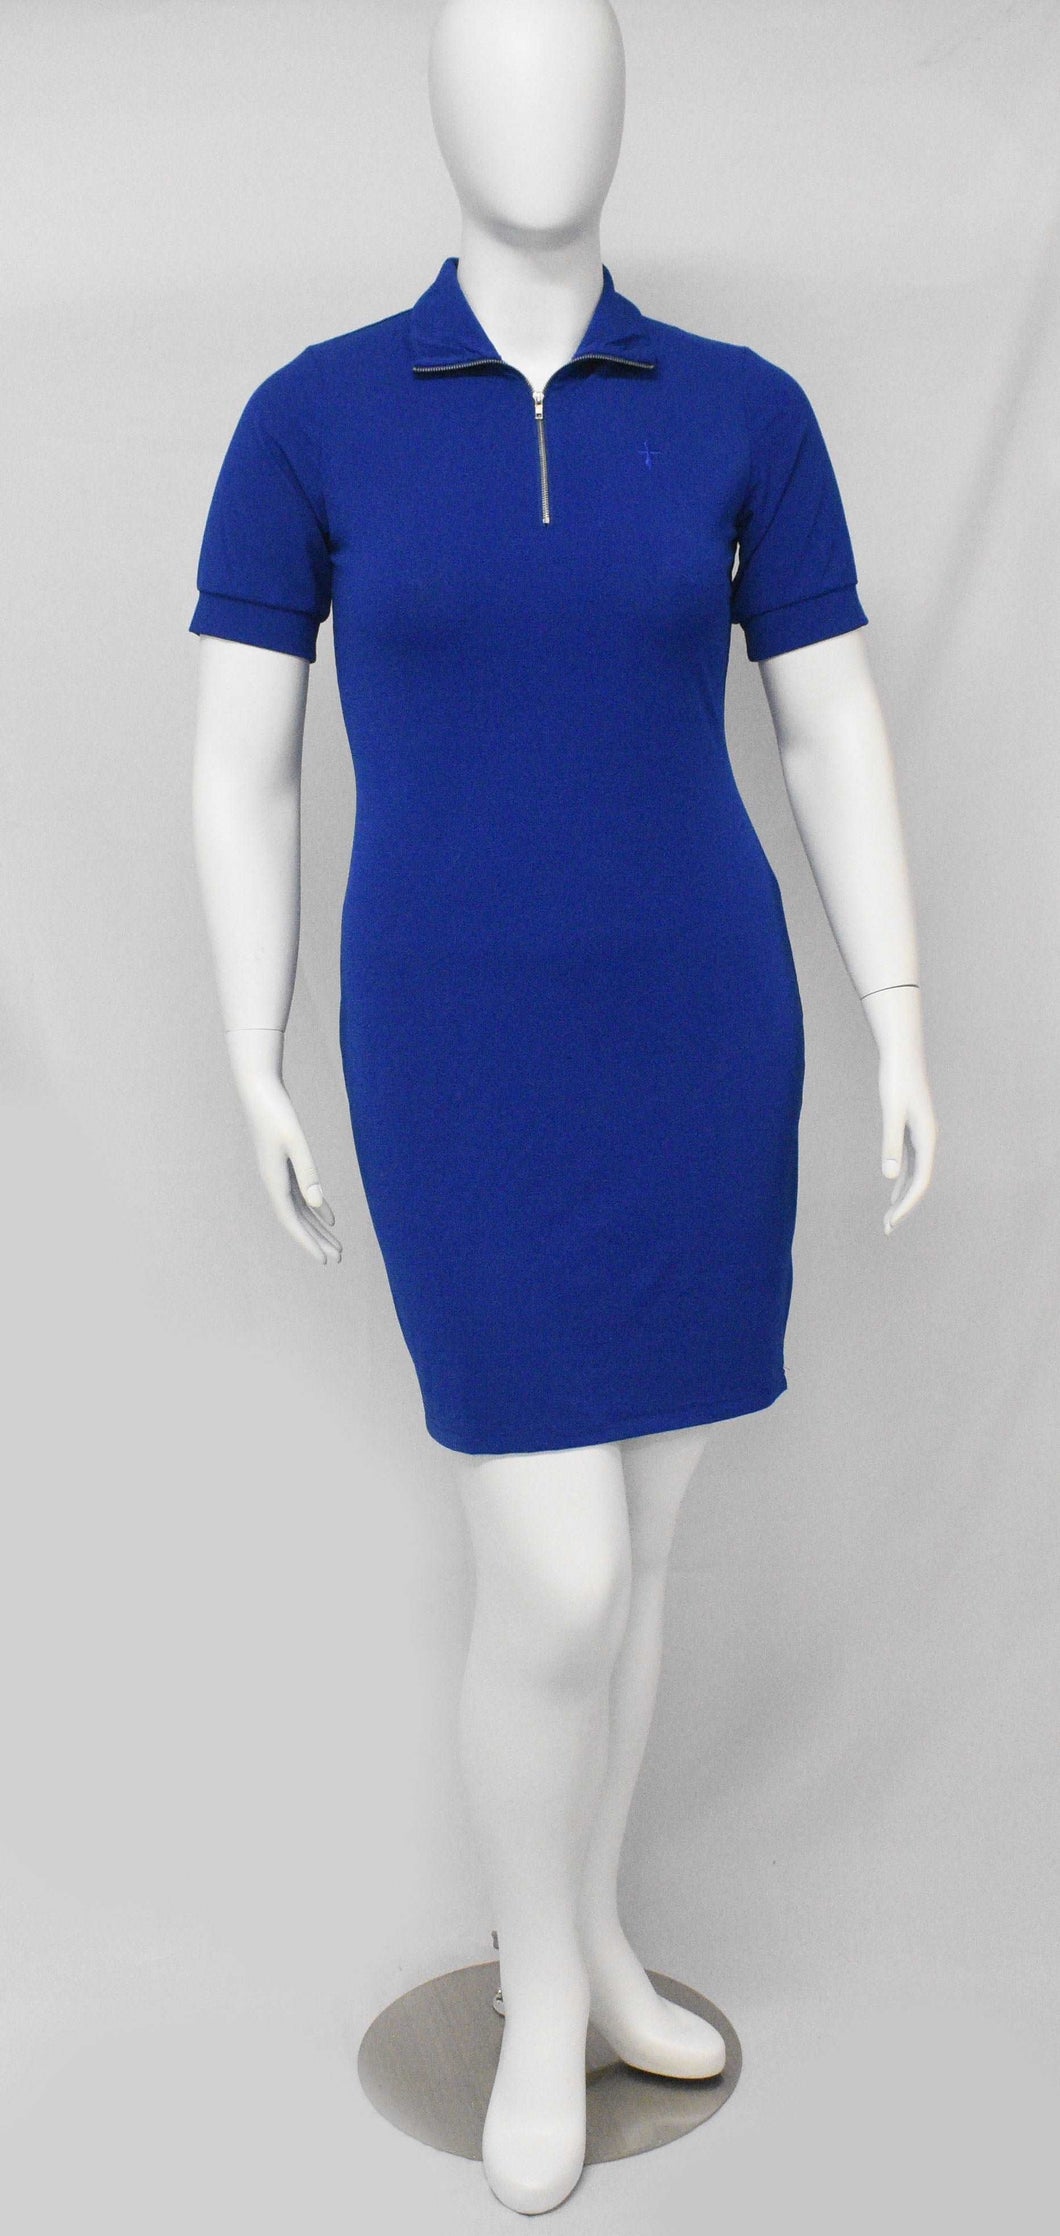 Fat Melting Sporting Gown Collar Shaper Dress- Blue